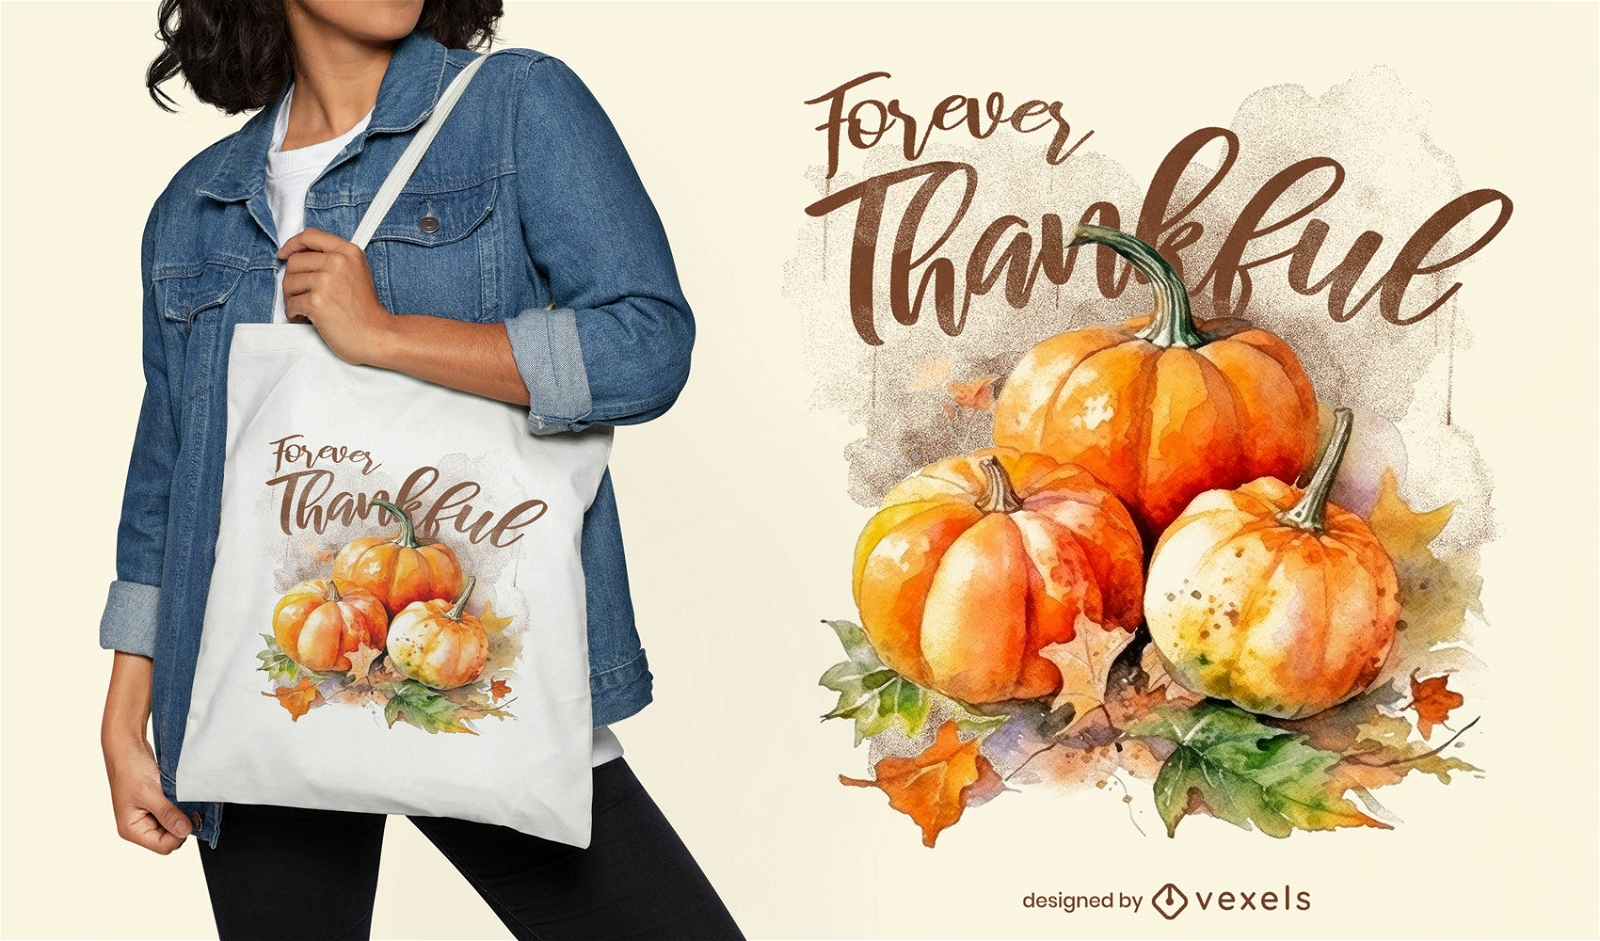 Thanksgiving pumpkin patch tote bag design